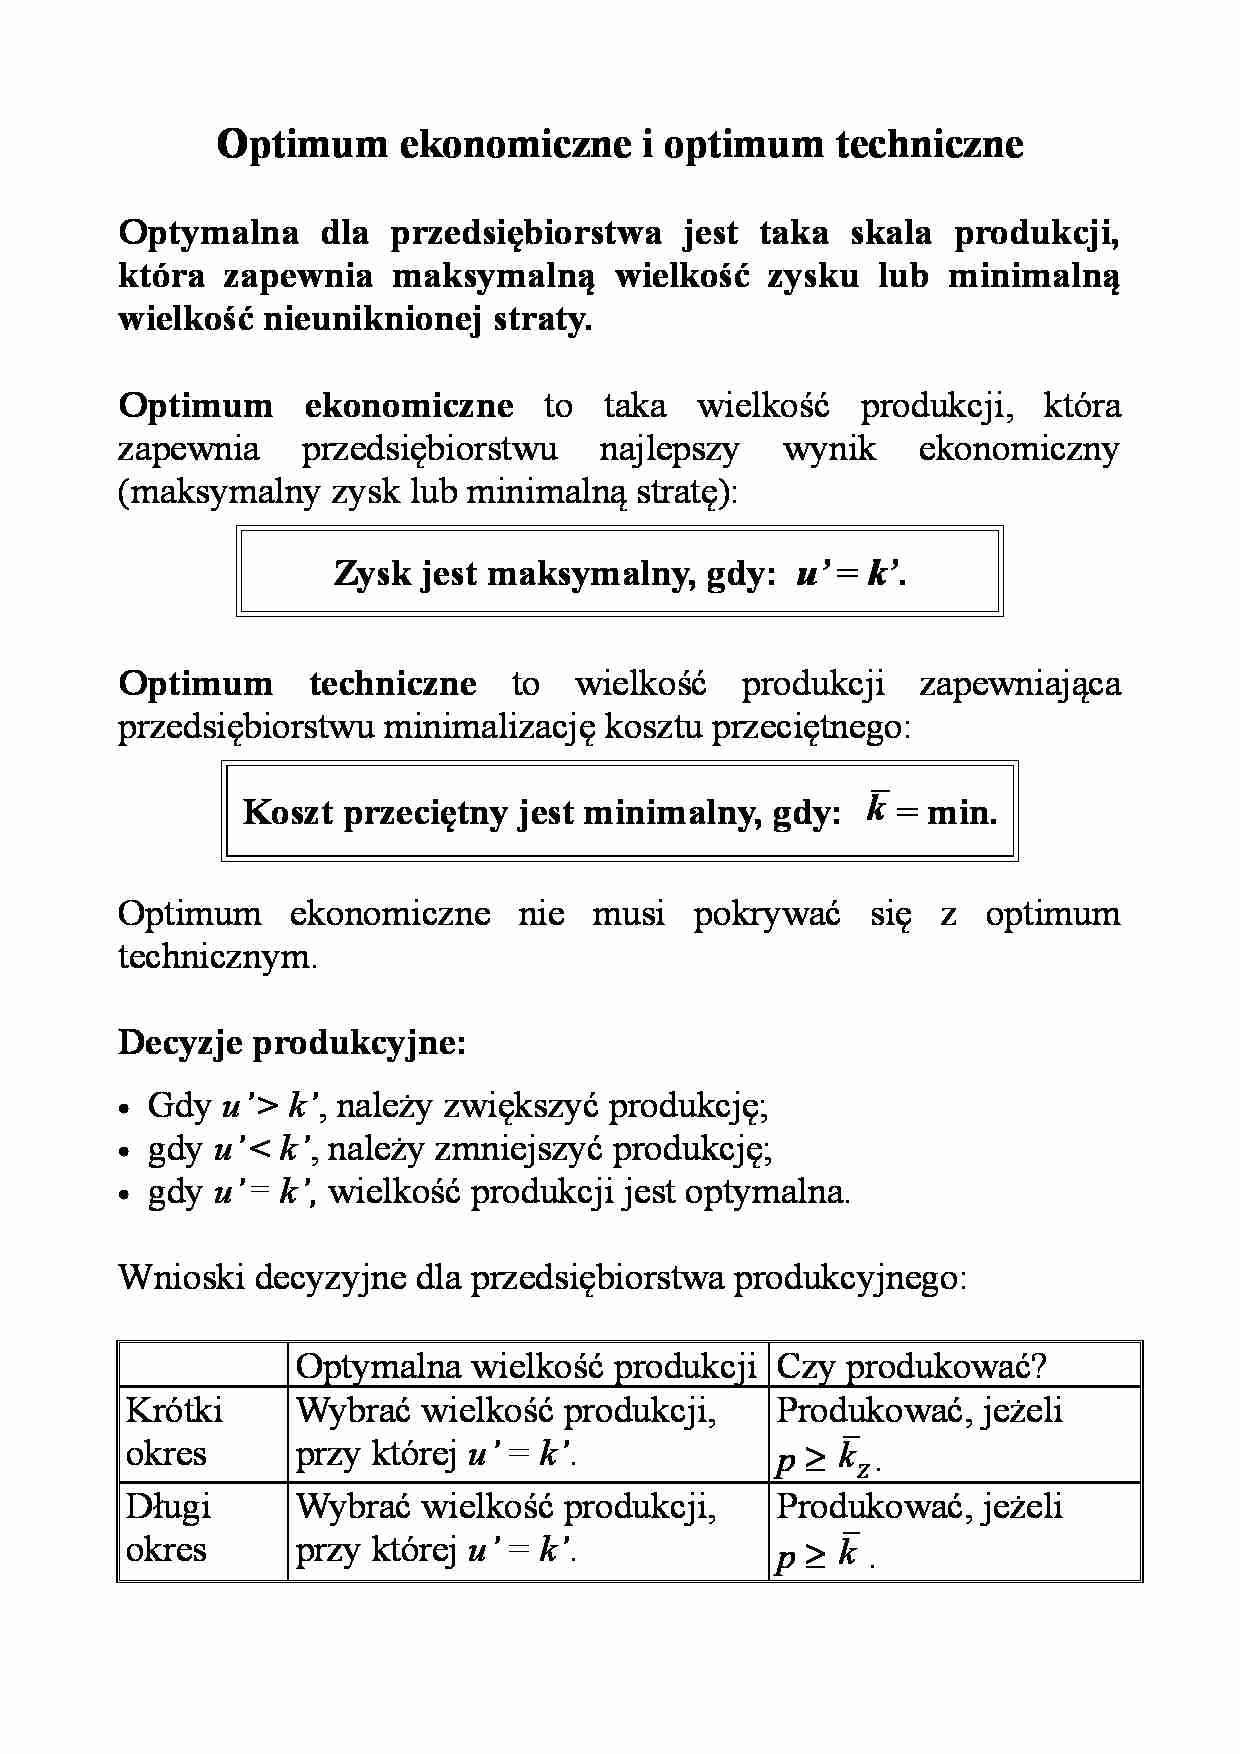 Optimum ekonomiczne i optimum techniczne - strona 1